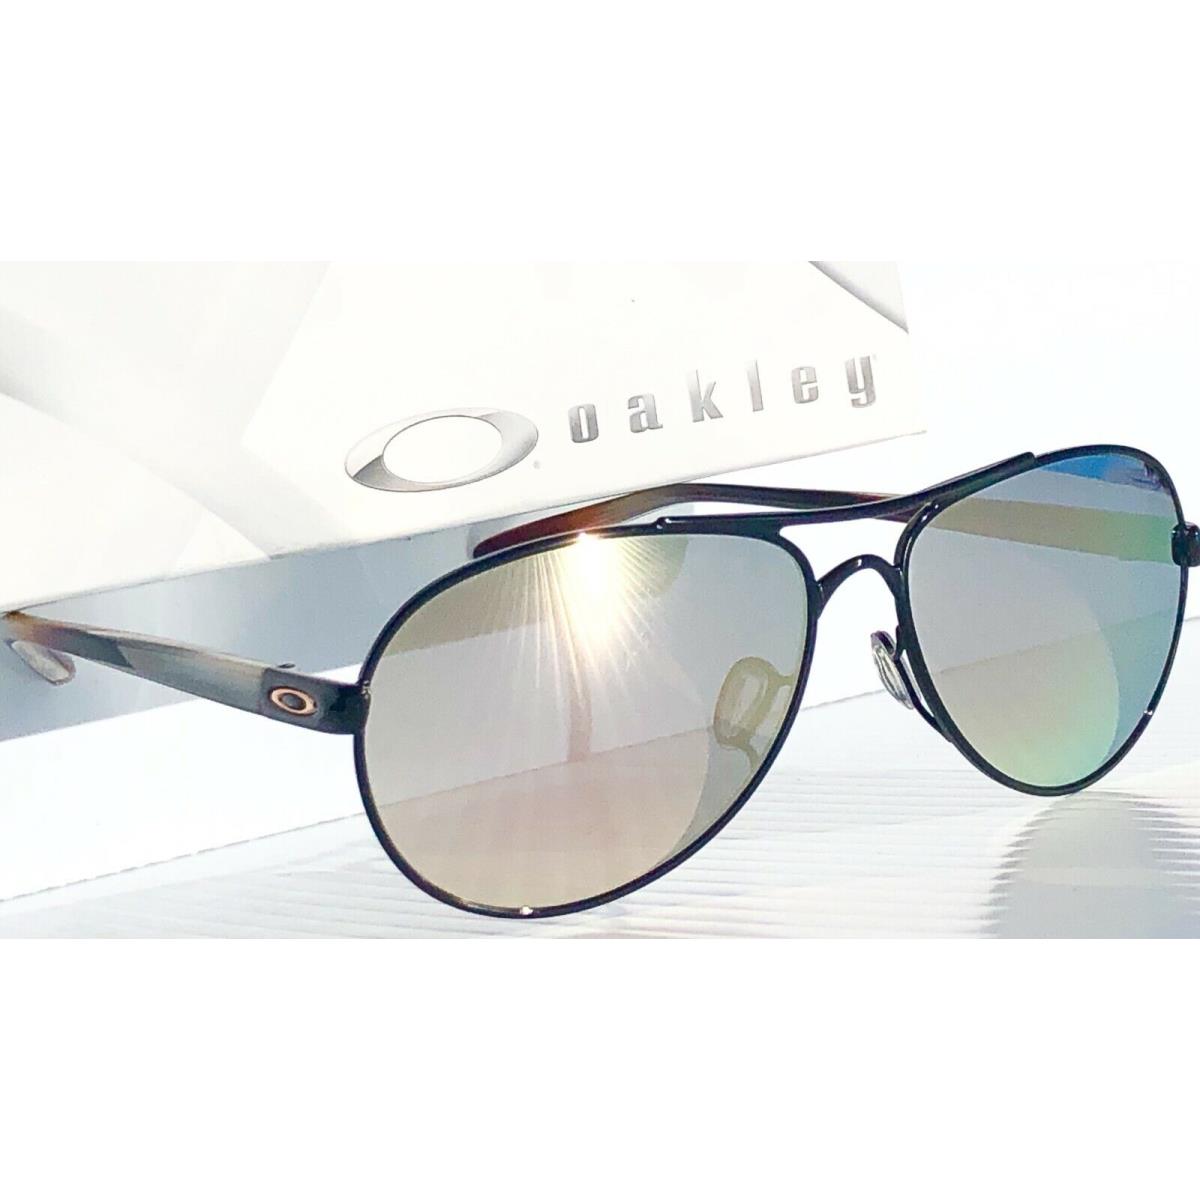 Oakley sunglasses Tie Breaker - Pink , Multicolor Frame, Pink Lens 4